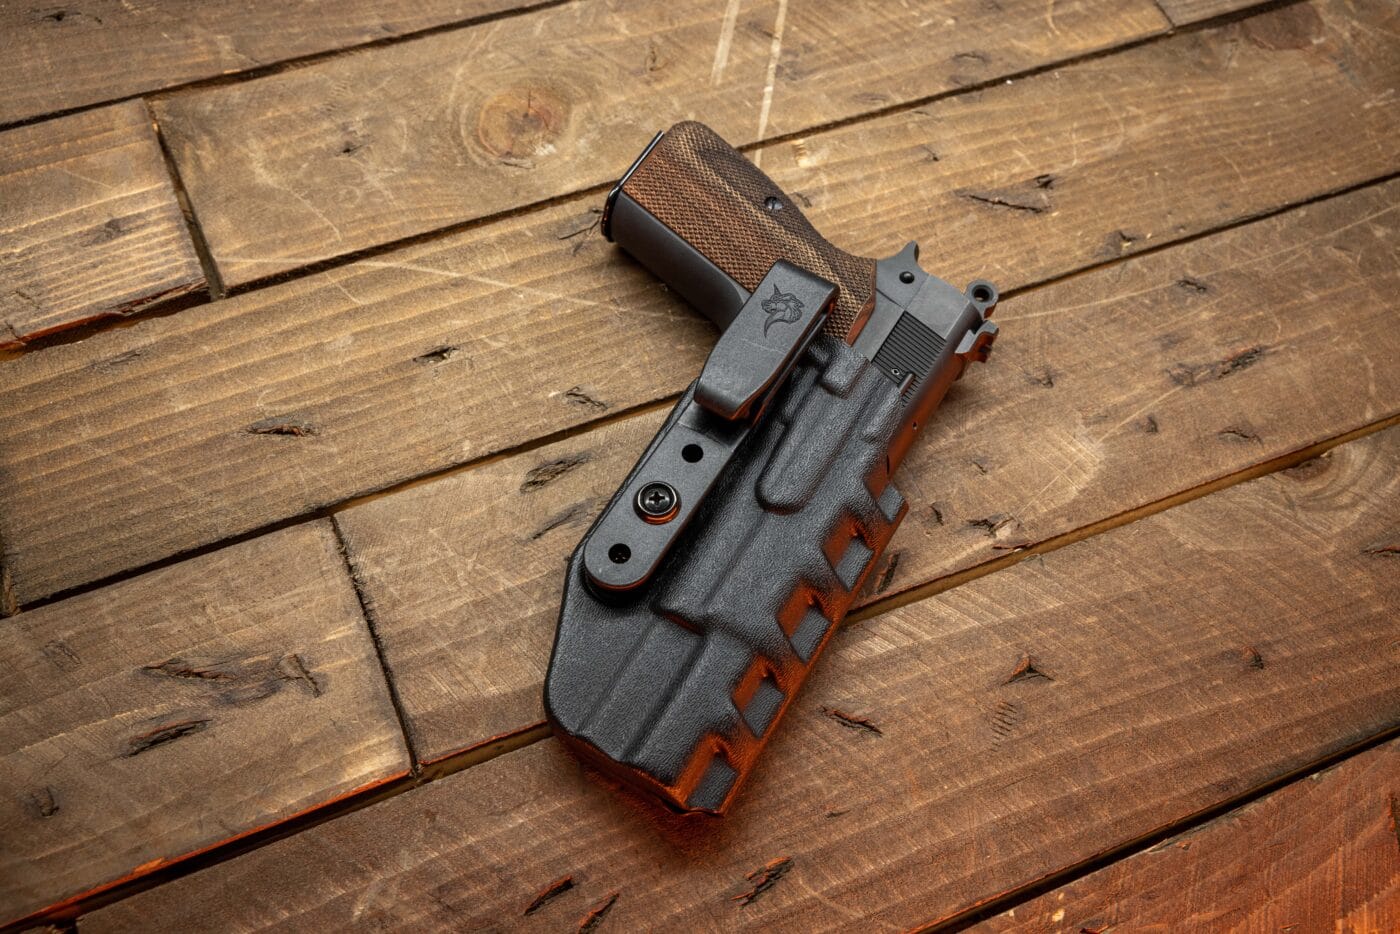 SA-35 pistol in DeSantis Slim-Tuk holster